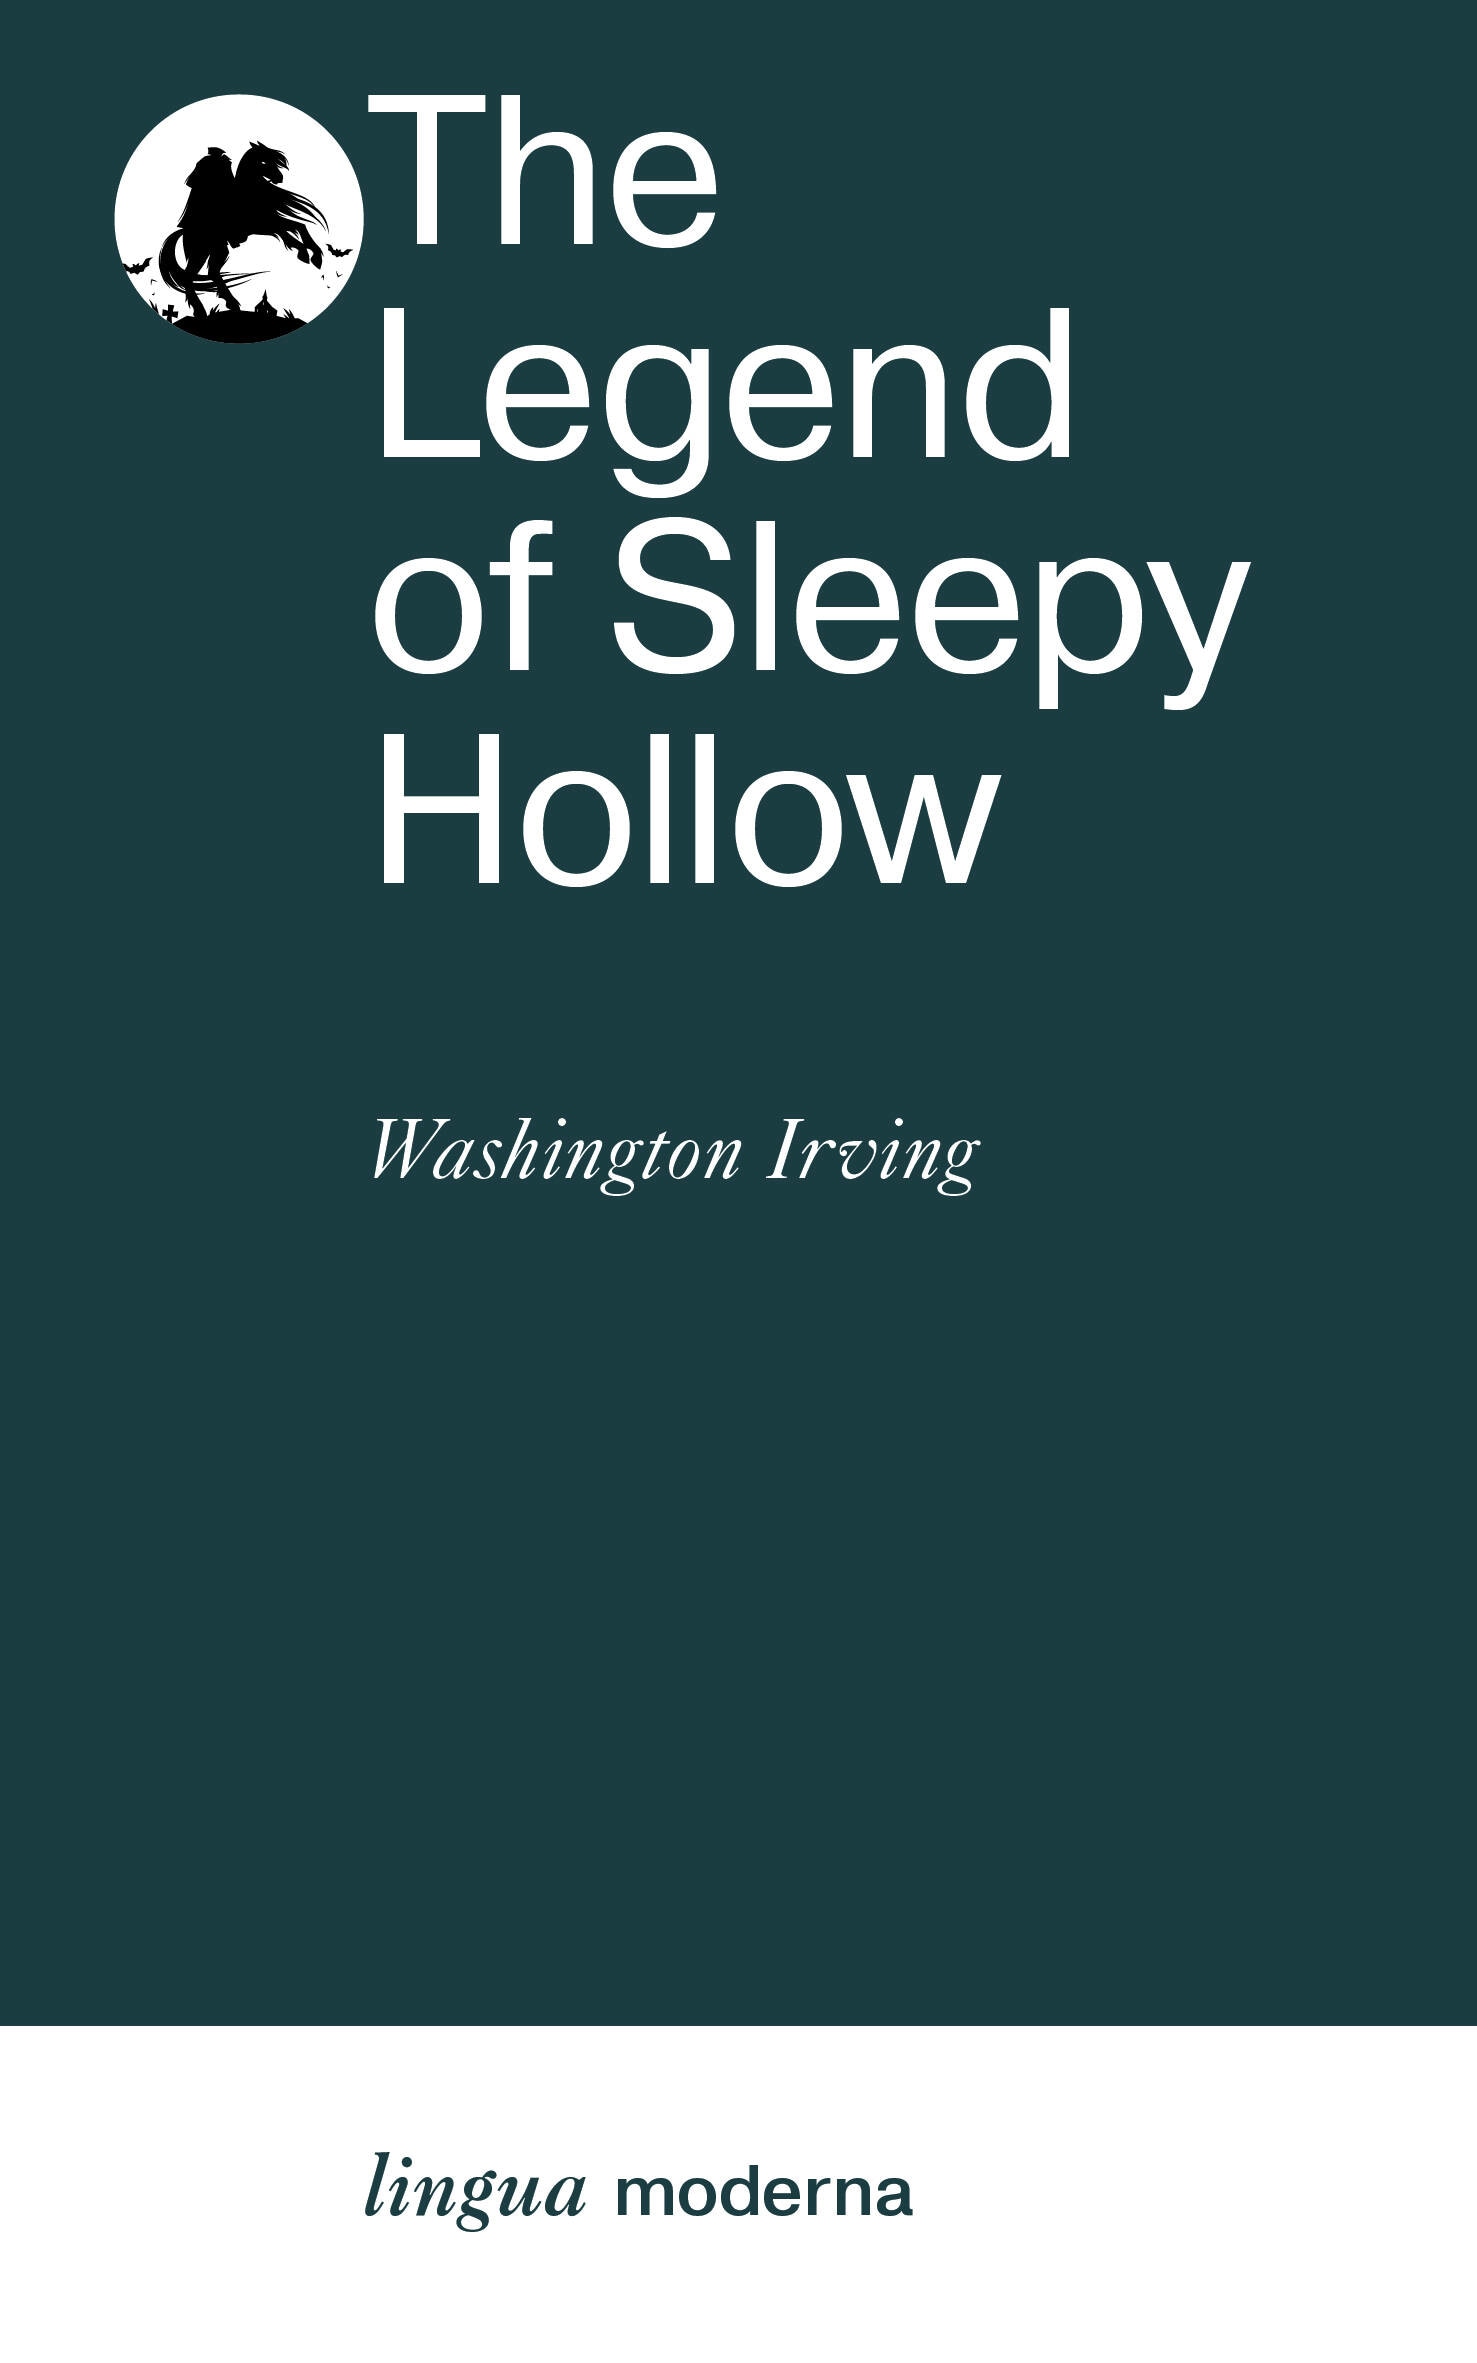 Book “The Legend of Sleepy Hollow” by Ирвинг Вашингтон — 2023